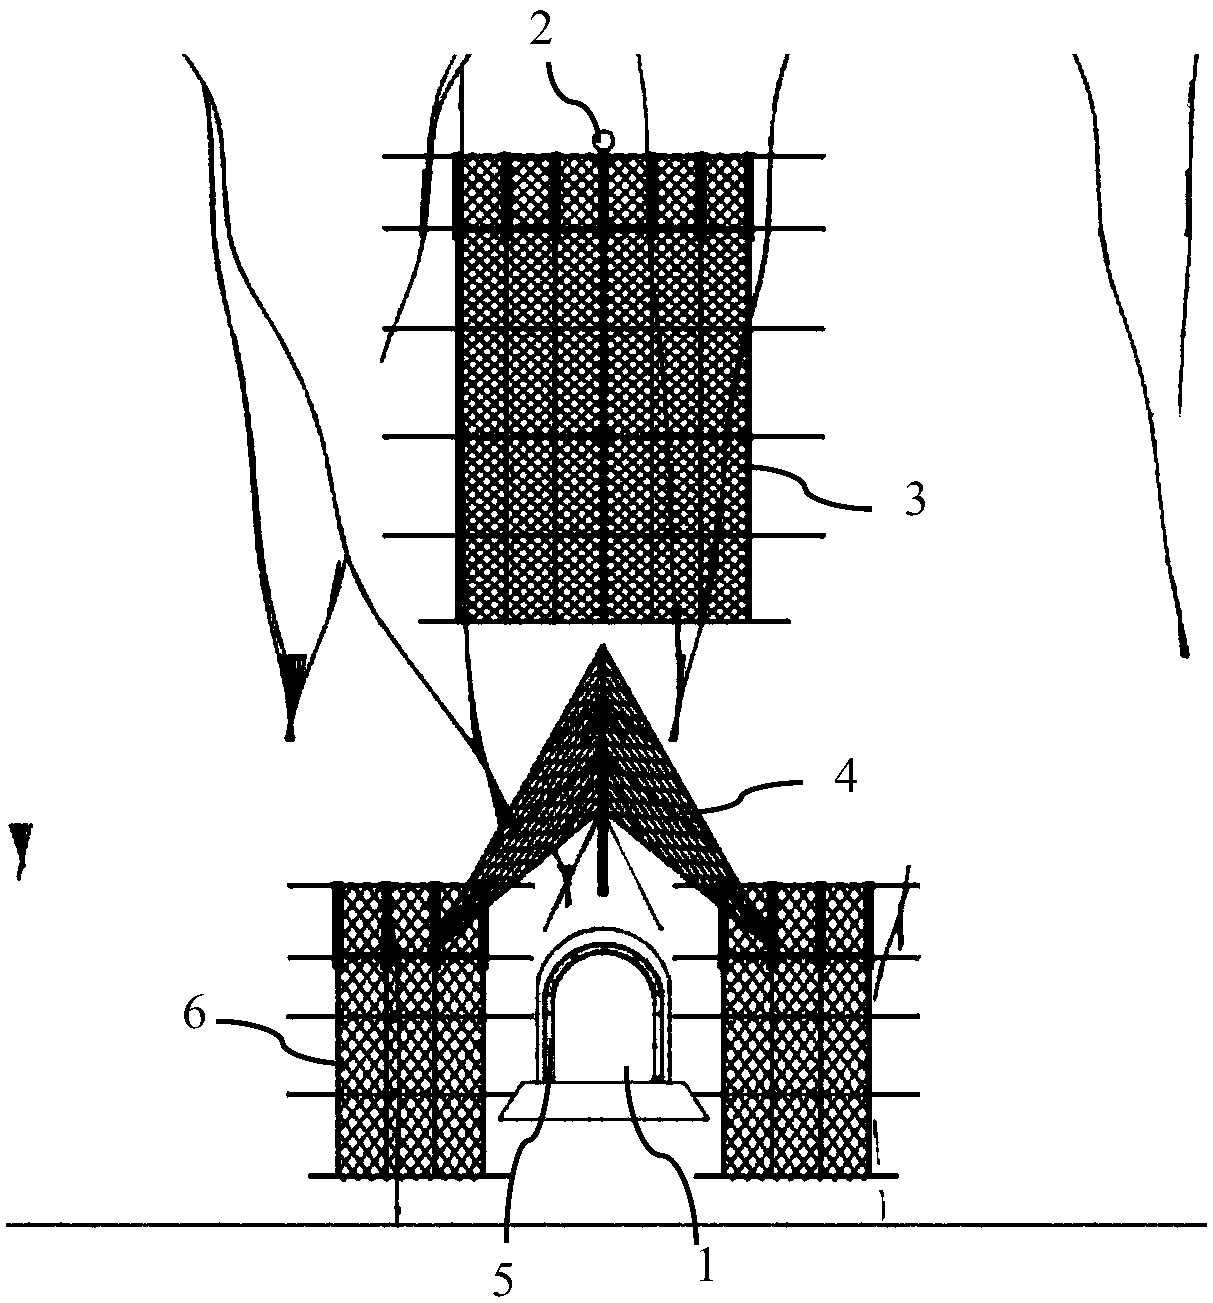 Three-dimensional protection design method used for tunnel portal rockfall hazard